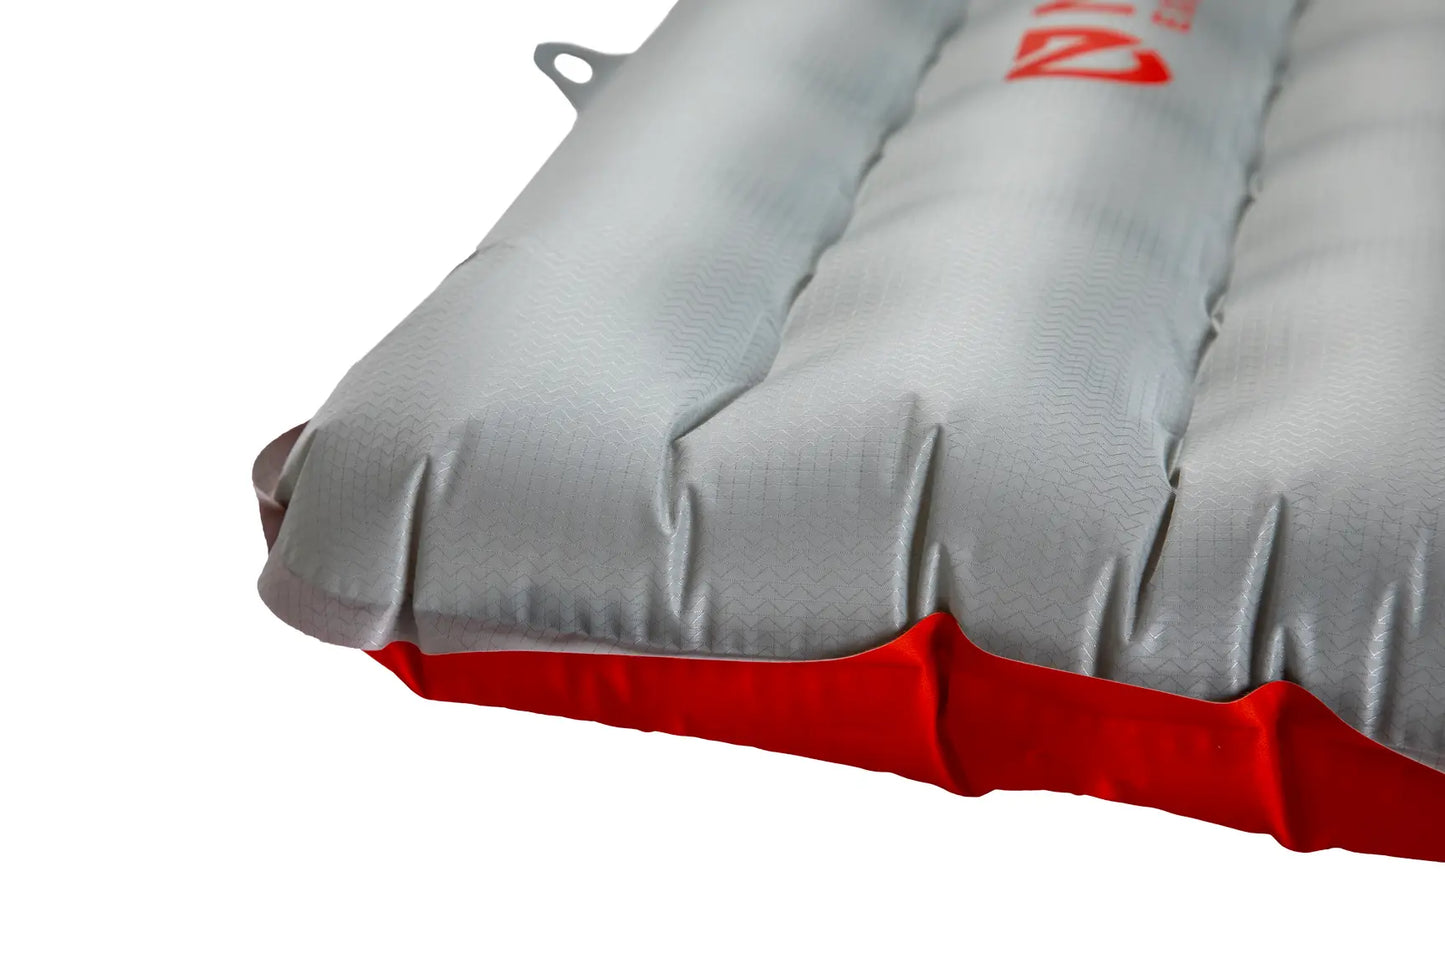 Nemo - Tensor All-Season Ultralight Insulated Sleeping Pad - Regular Wide